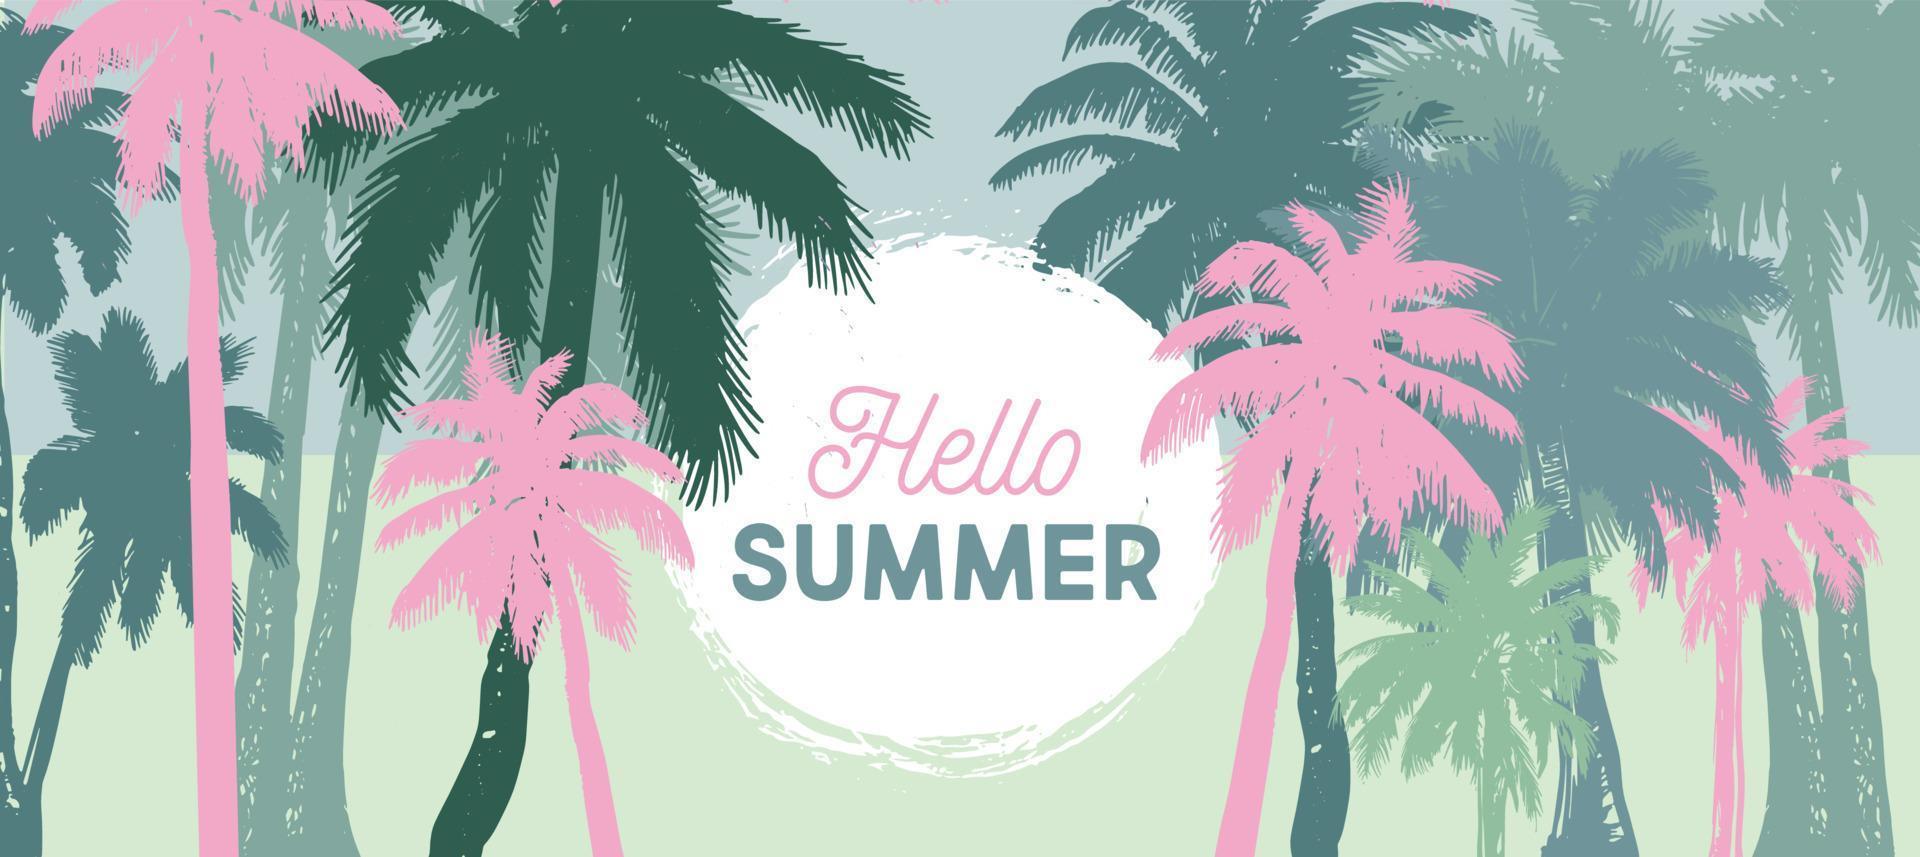 Hello Summer, Palm hand drawn illustrations, vector